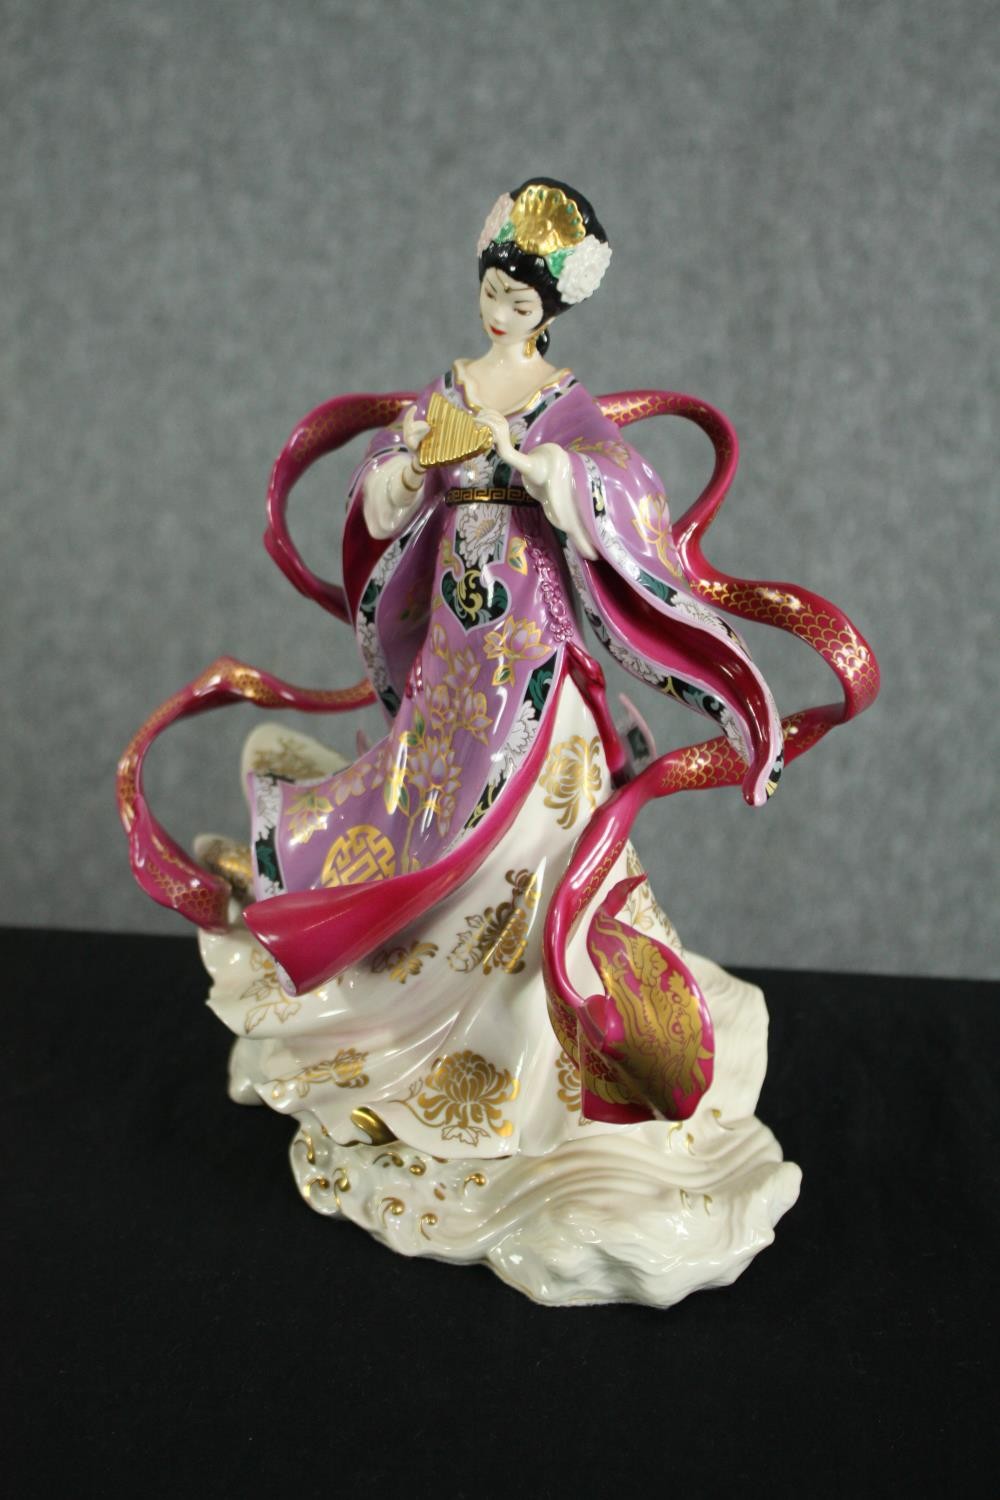 Franklin Mint. The Dragon King's Daughter designed by Caroline Young. Porcelain figurine. H.29cm. - Image 2 of 5